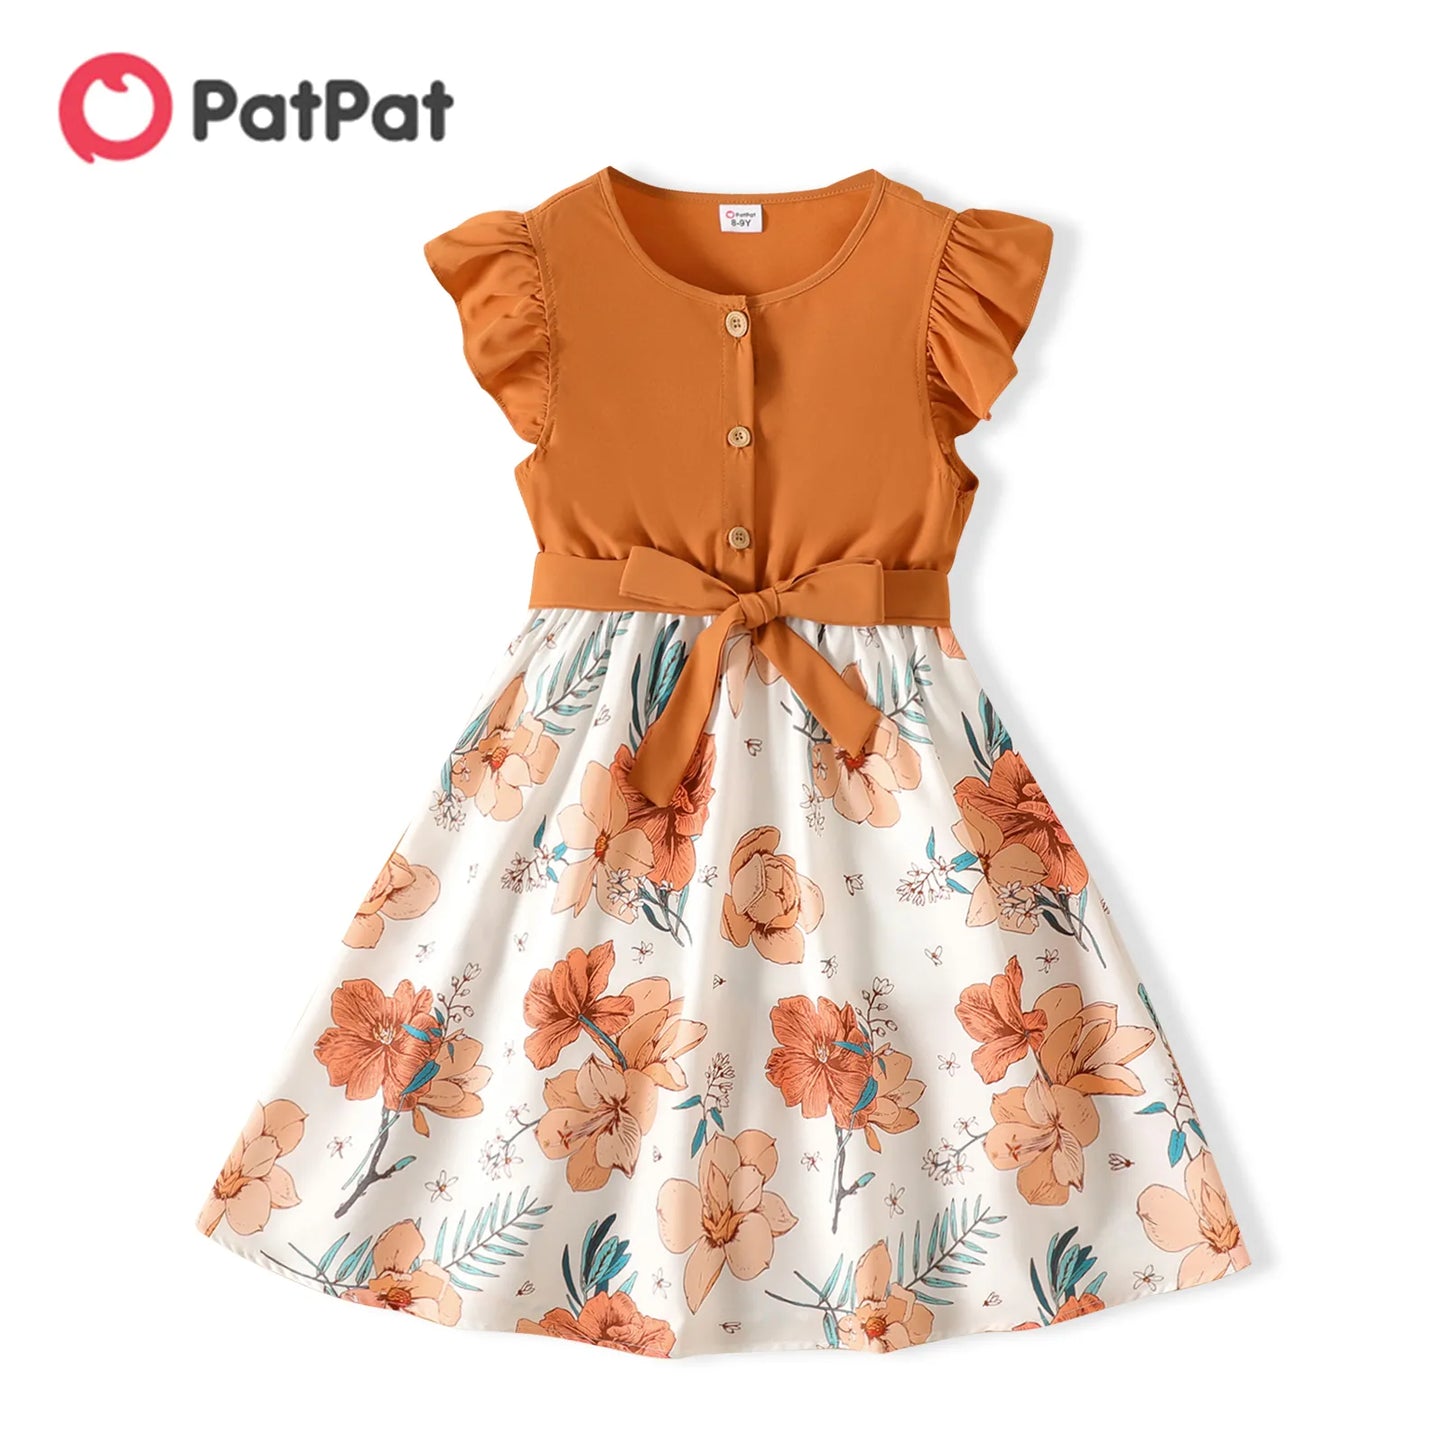 PatPat Girl Kids Dress Girl Dresses for Very Elegant Party Ruffled Floral Print Splice Belted Flutter-sleeve Dress Girl Clothing